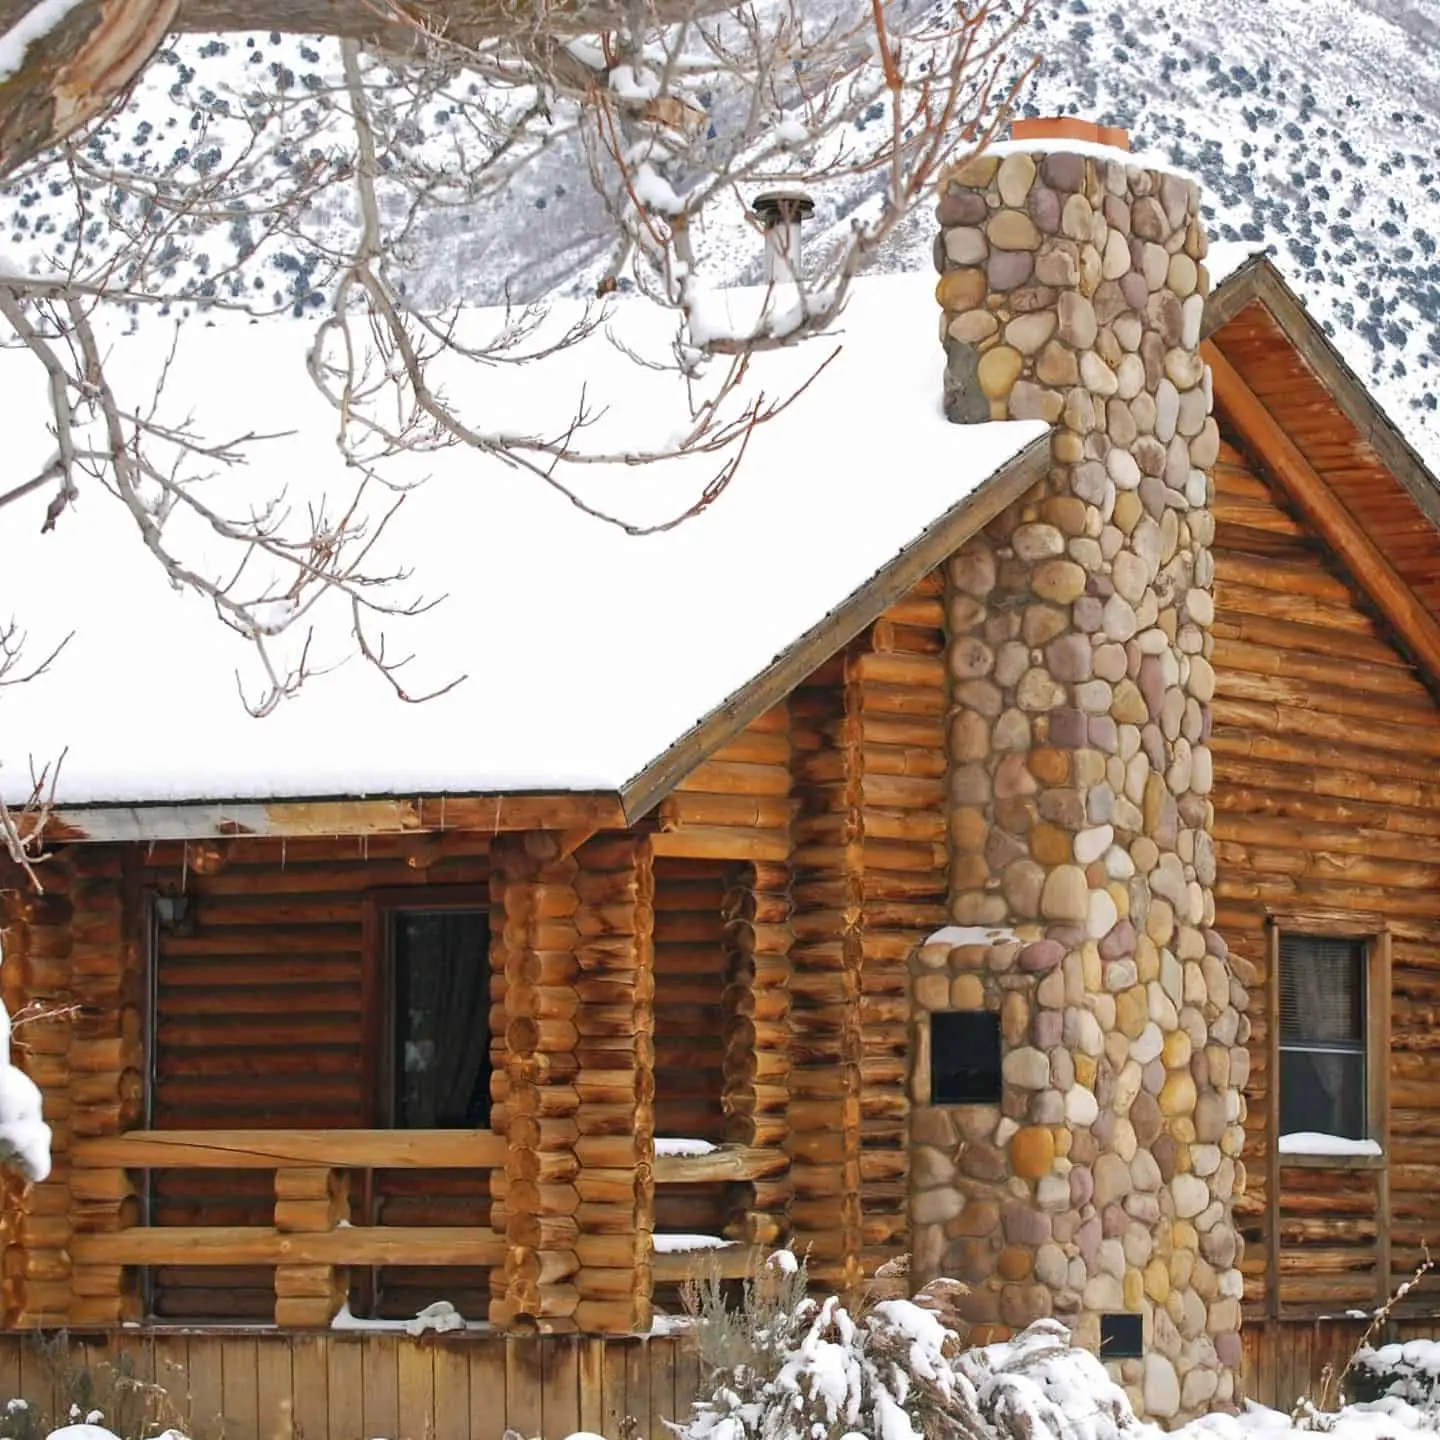 preparing your cabin for winter